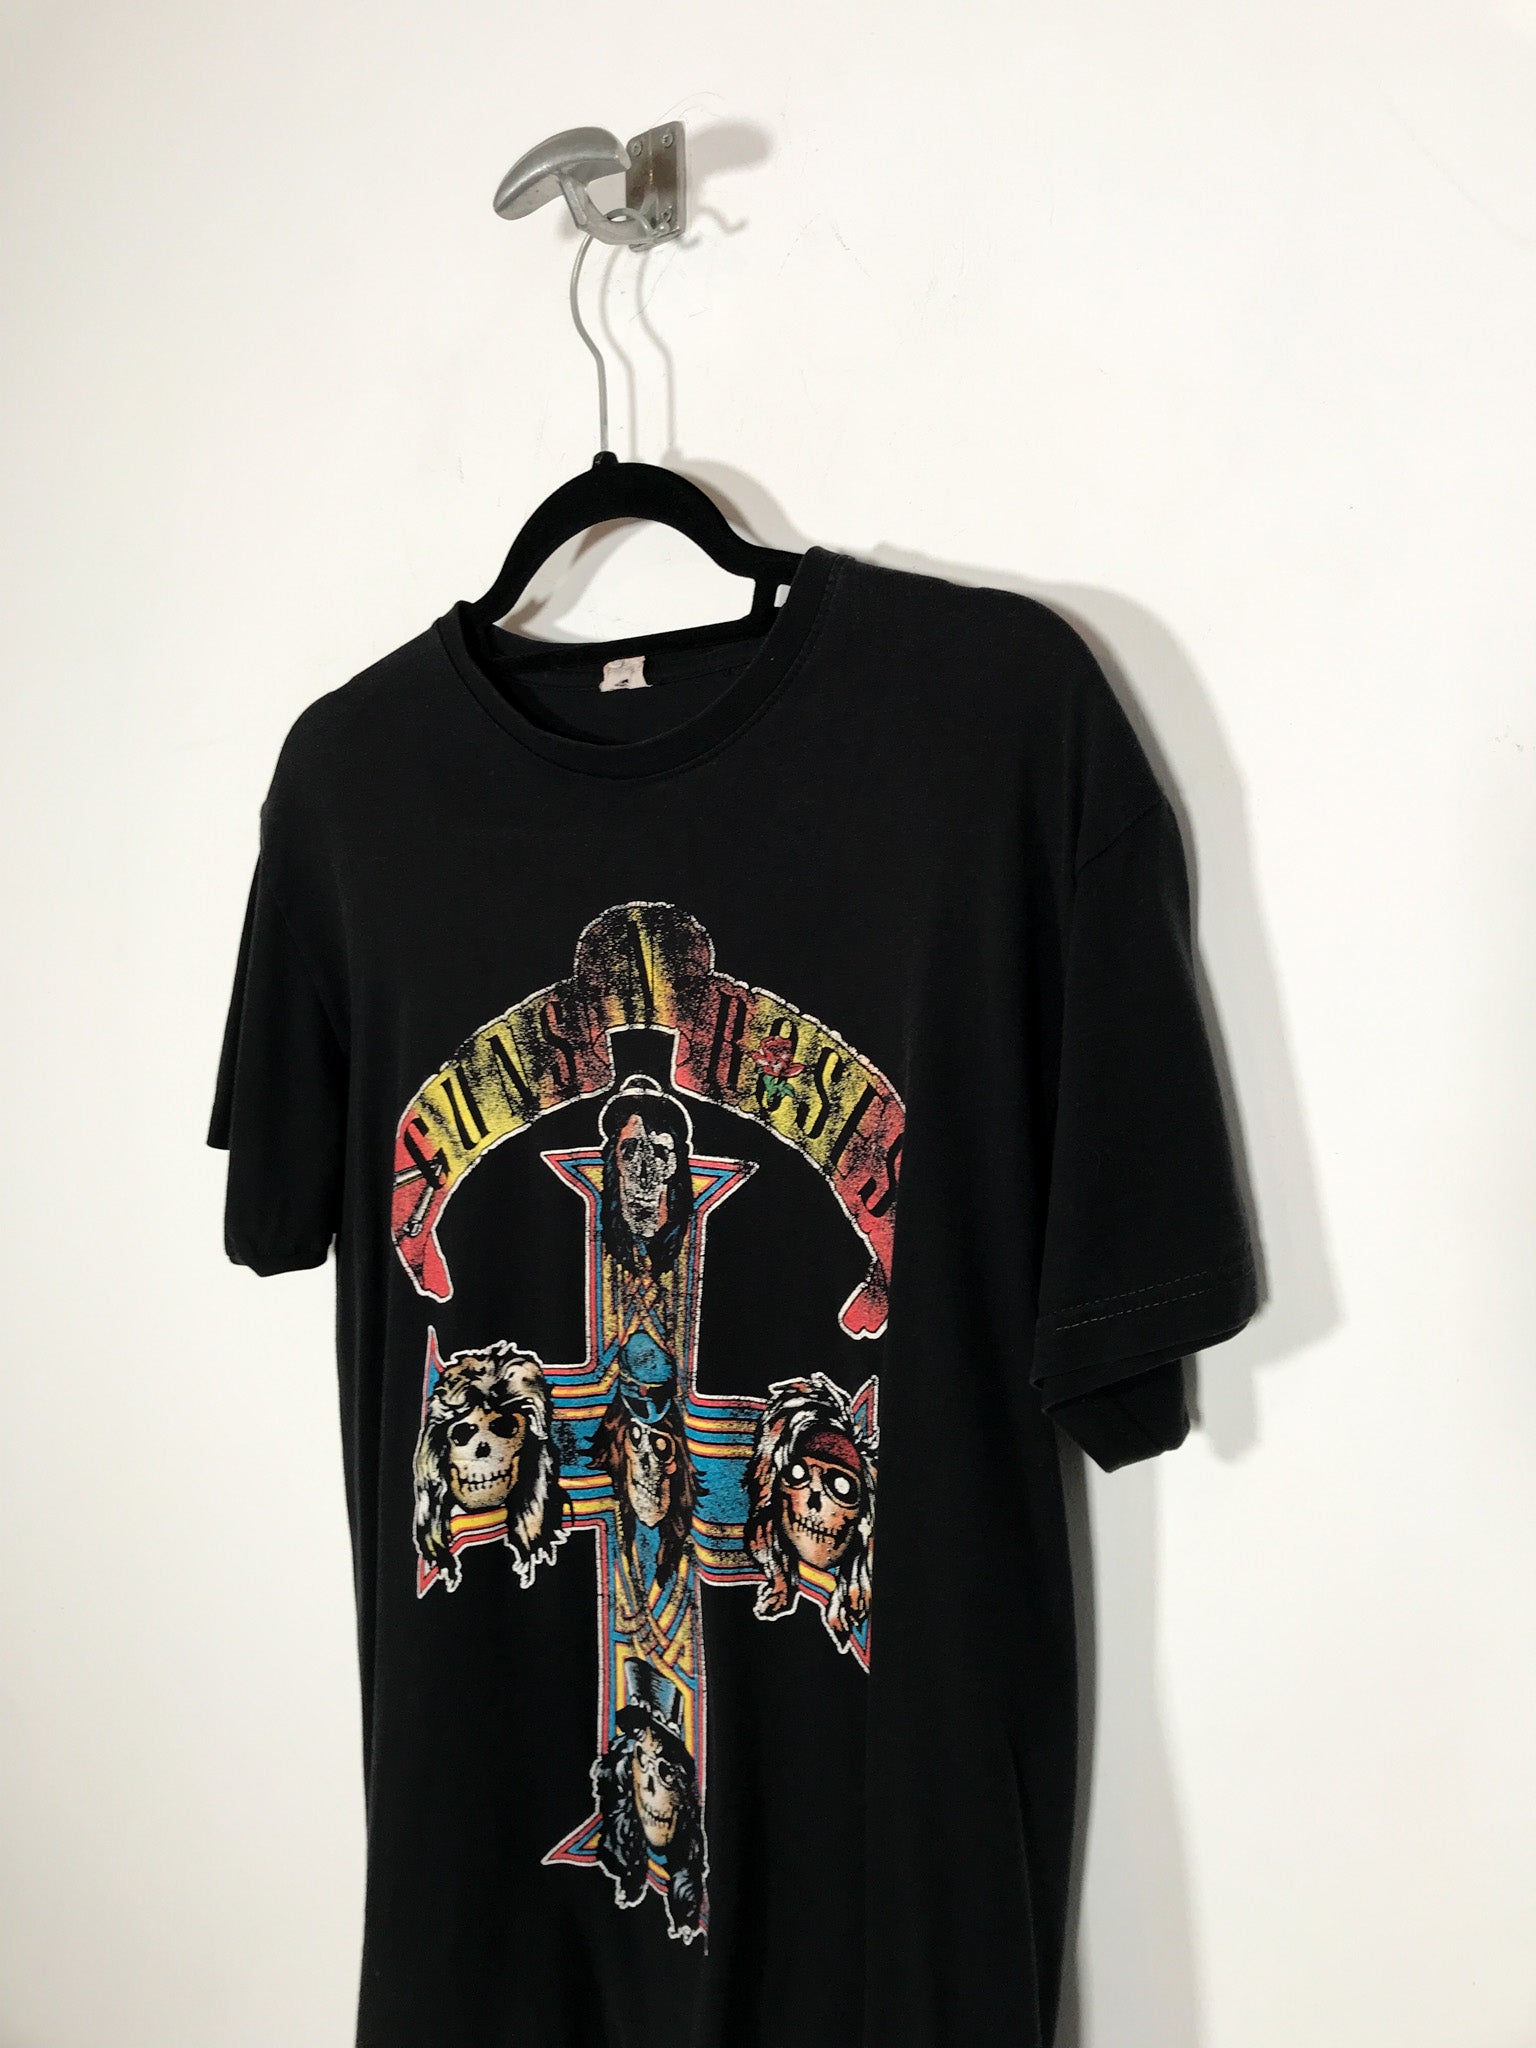 Camiseta Guns N' Roses - Talla S - Caramelo Vintage